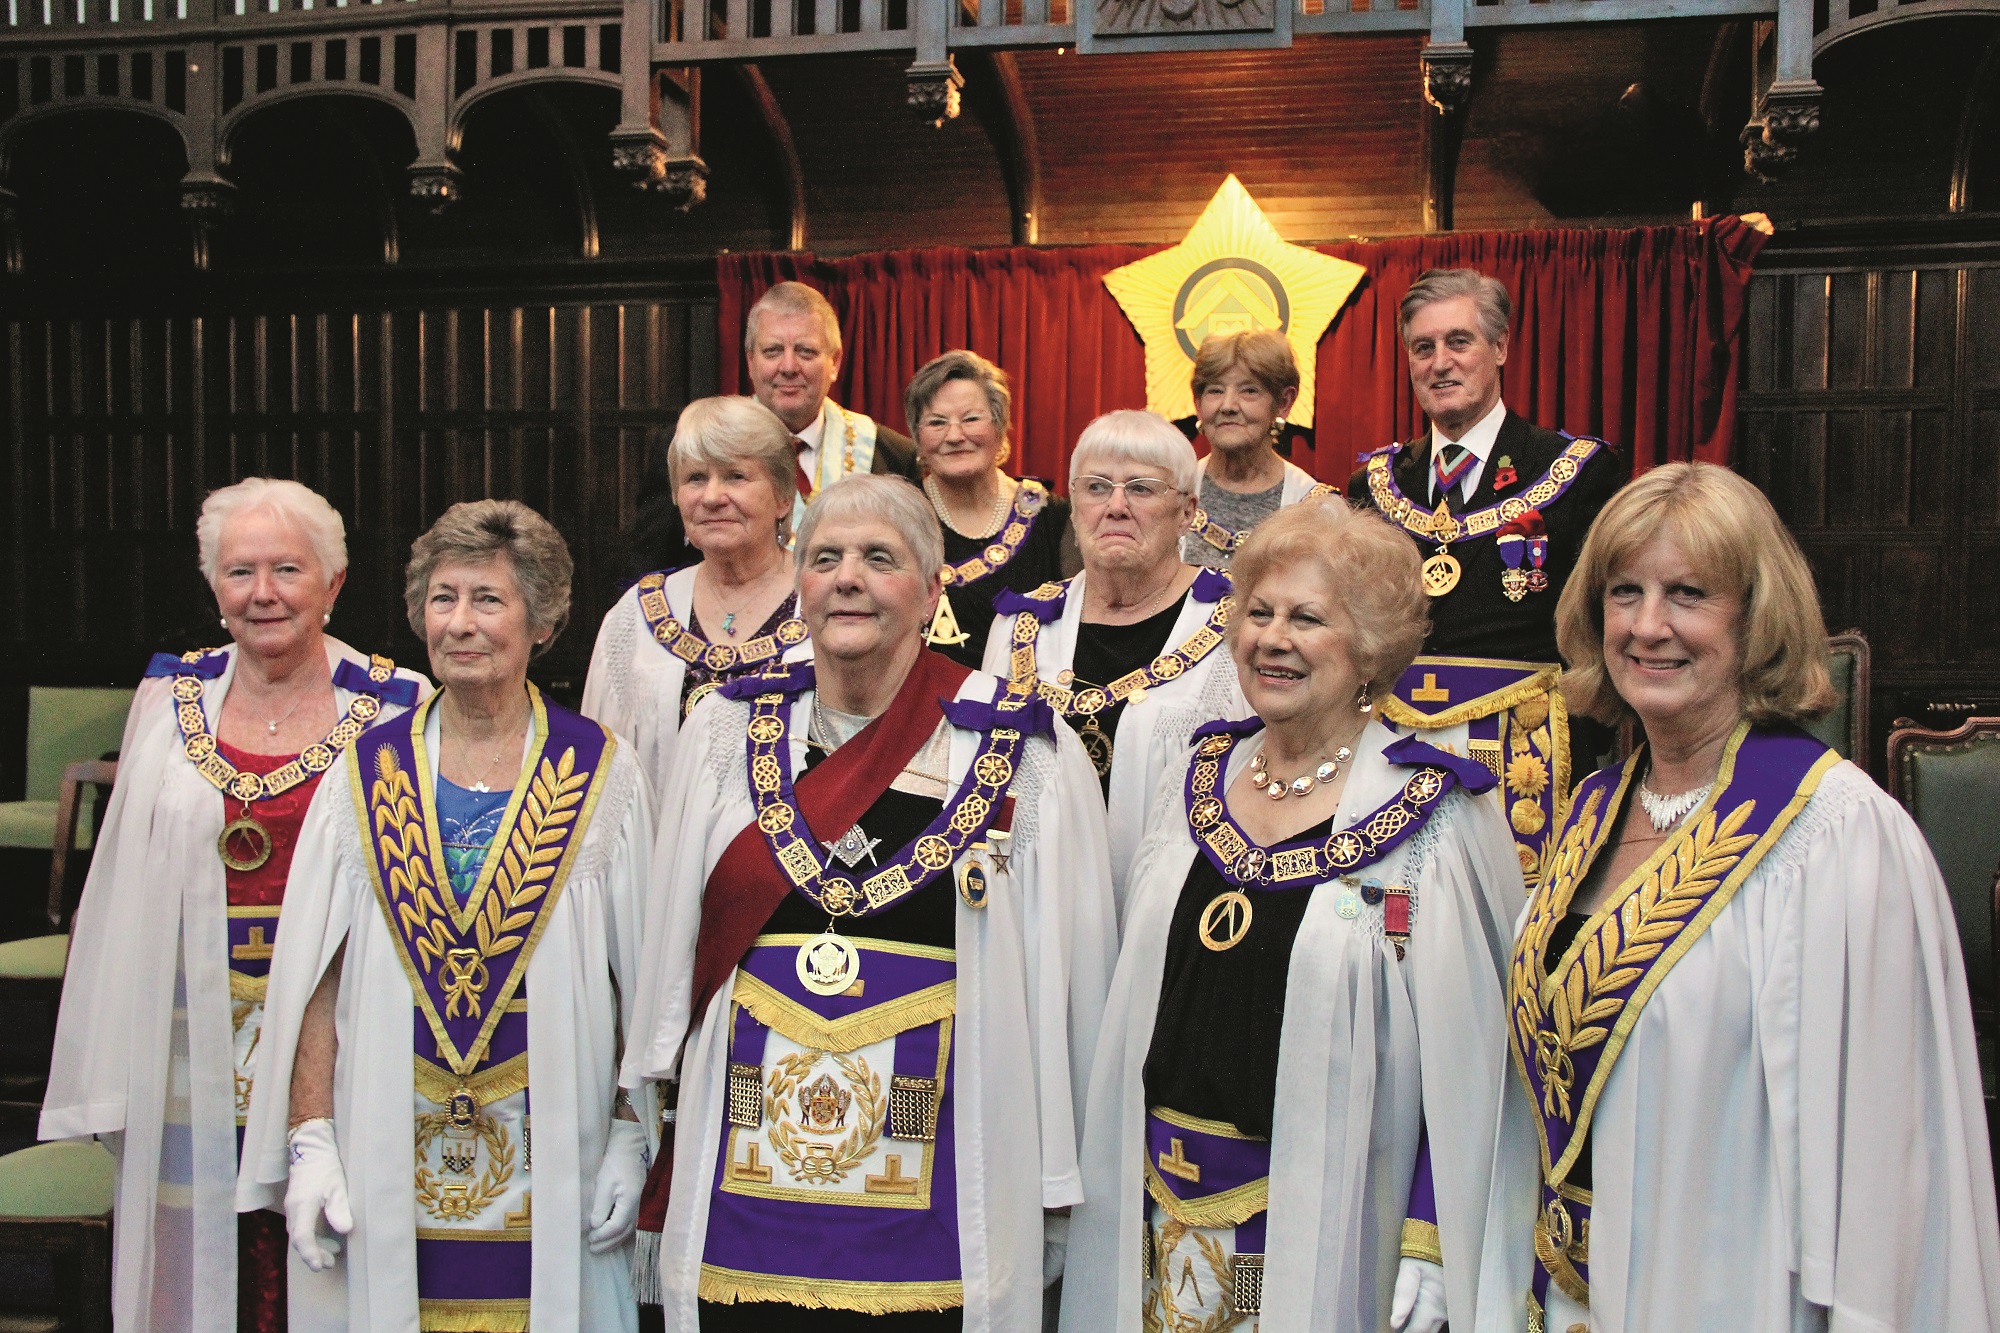 Male and Female Freemasons in their regalia